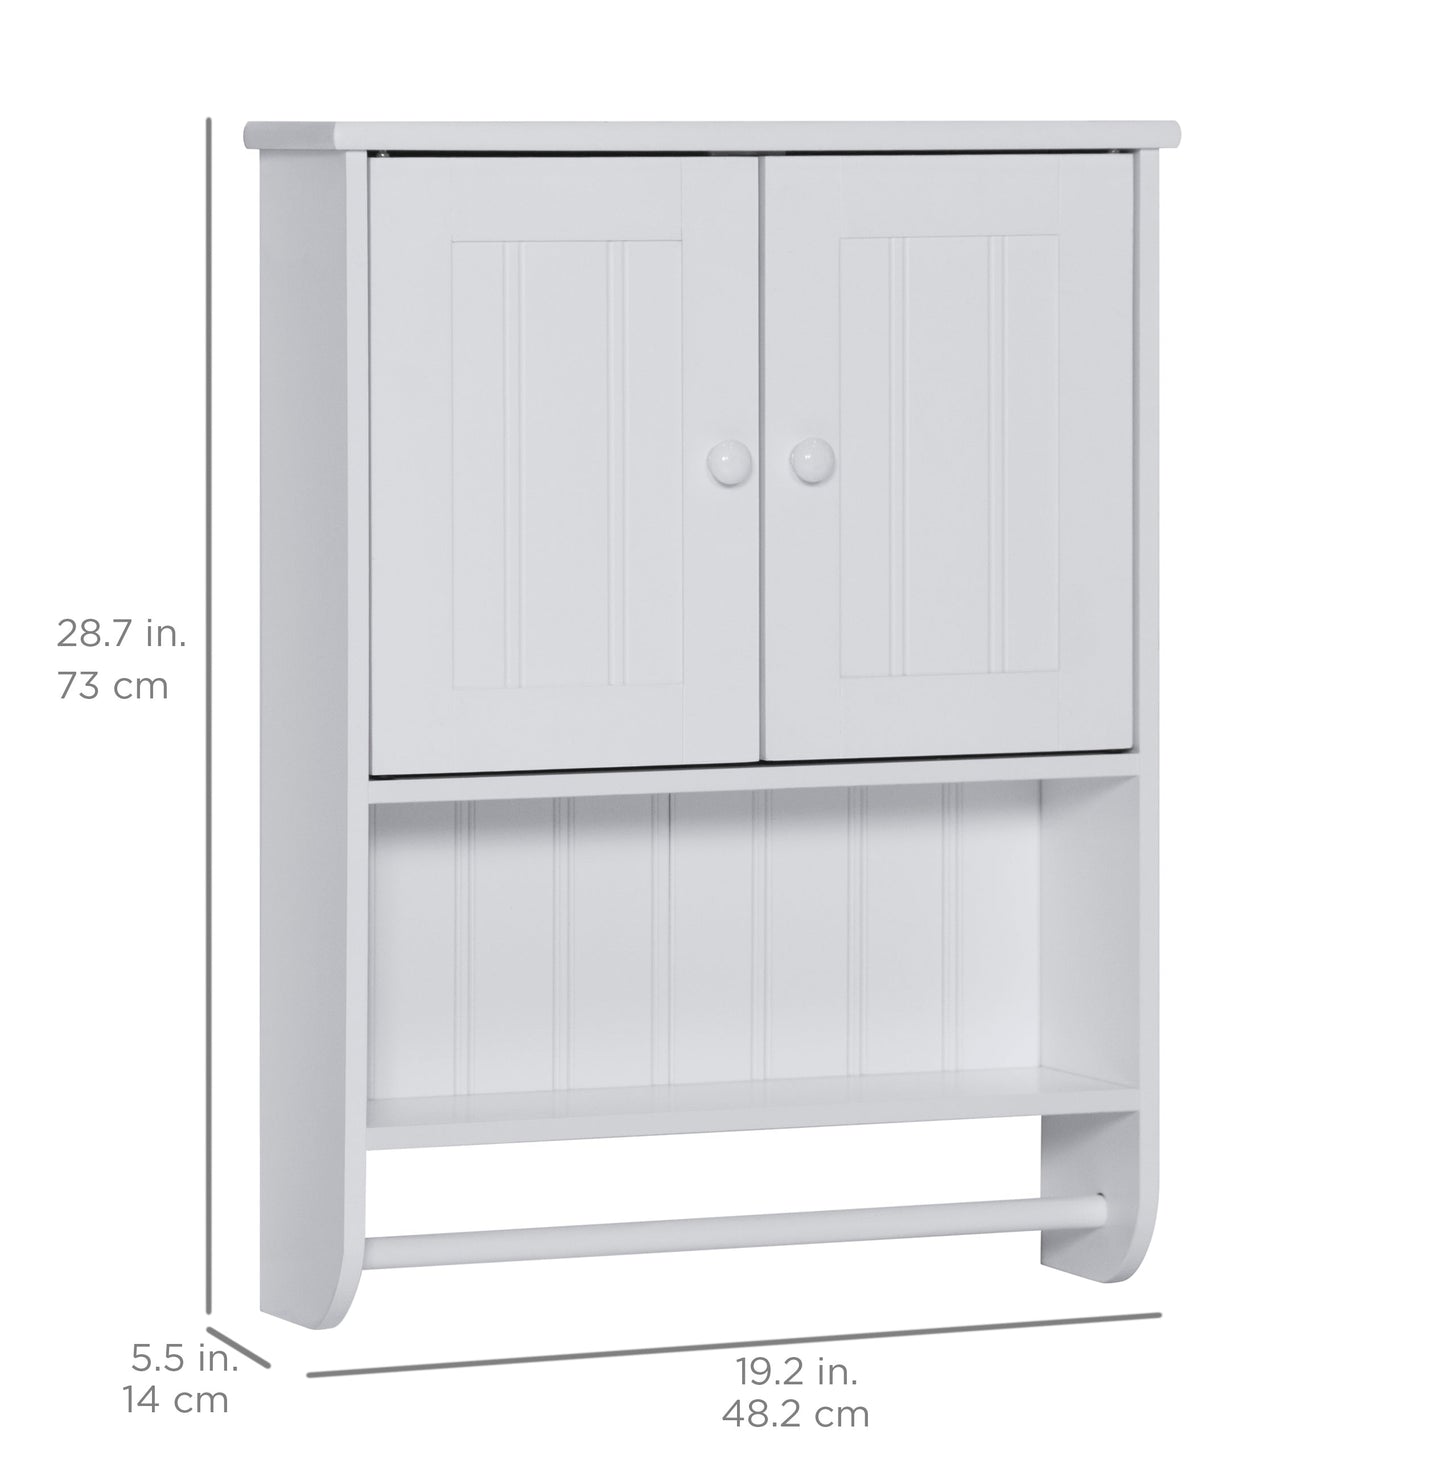 Bathroom Wall Storage Organization Cabinet w/ Double Doors, Towel Bar